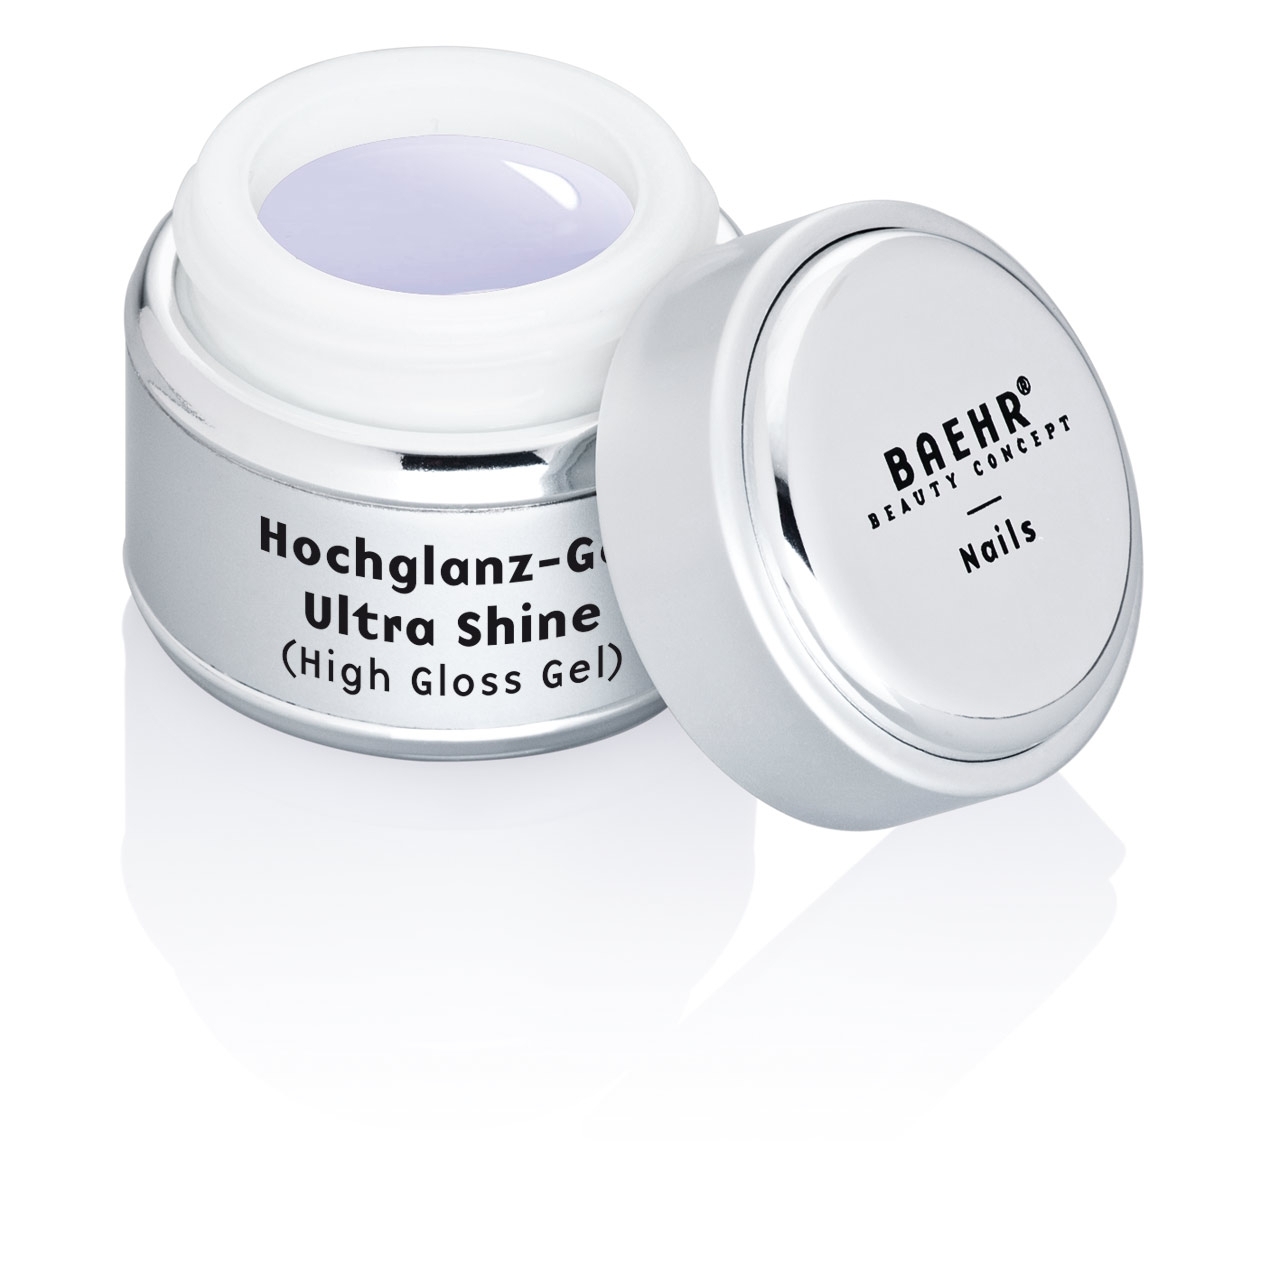 BAEHR BEAUTY CONCEPT - NAILS Hochglanz-Gel Ultra Shine 30 ml